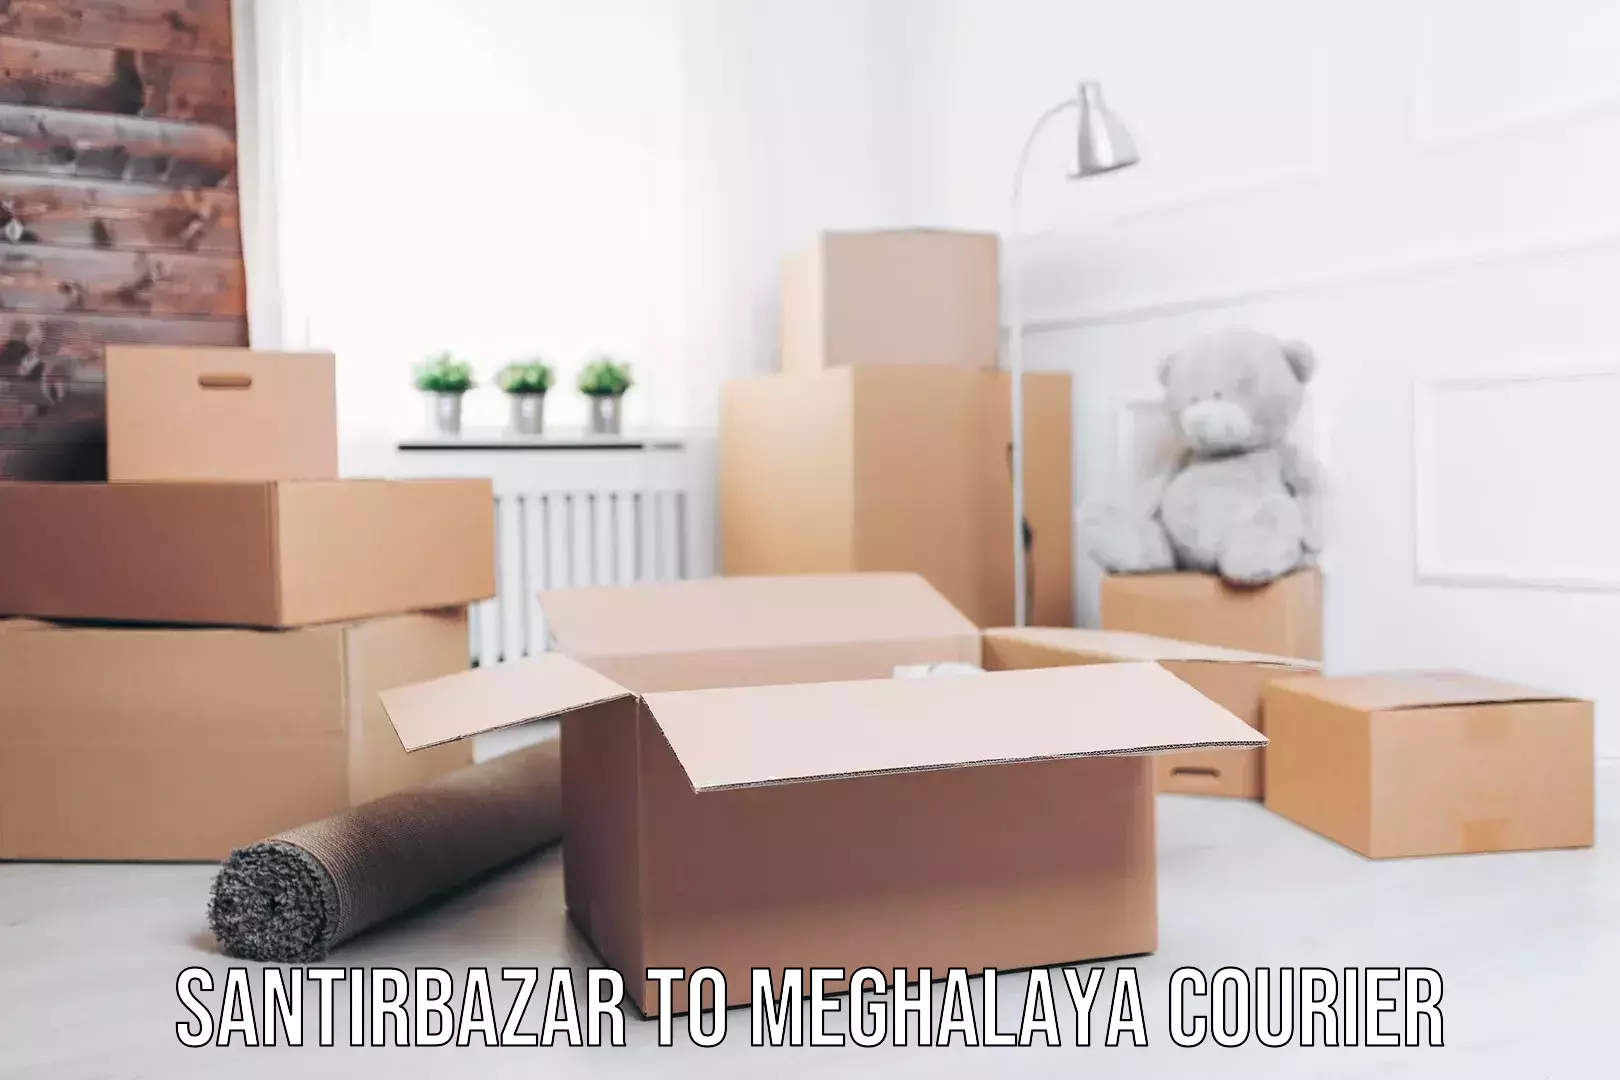 24-hour courier service Santirbazar to Meghalaya